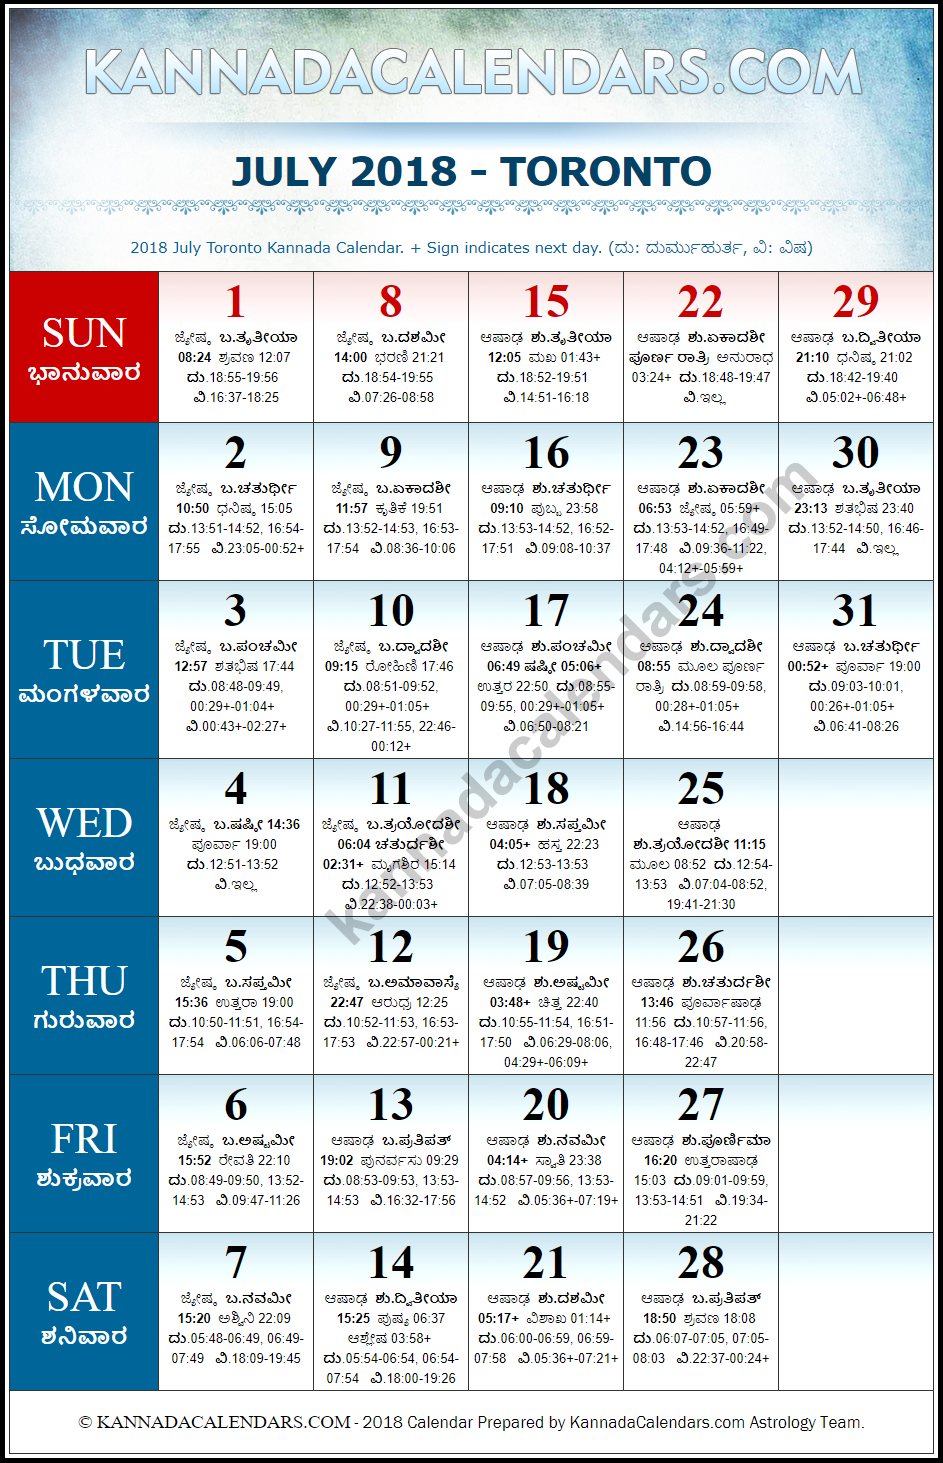 July 2018 Kannada Calendar for Toronto, Canada